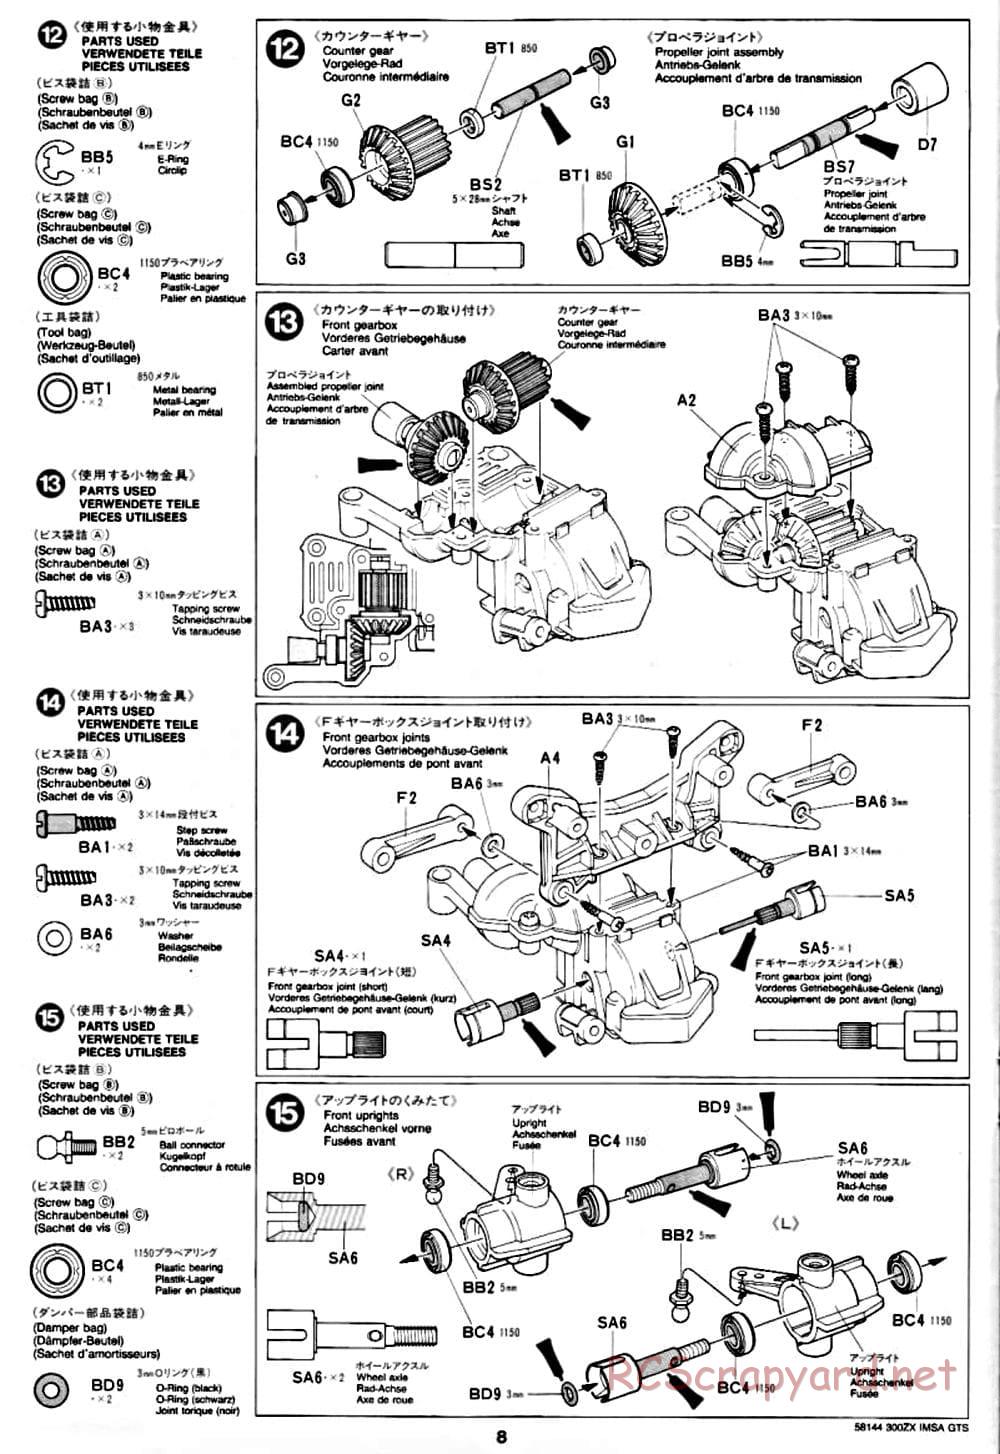 Tamiya - Nissan 300ZX IMSA-GTS - TA-02W Chassis - Manual - Page 8